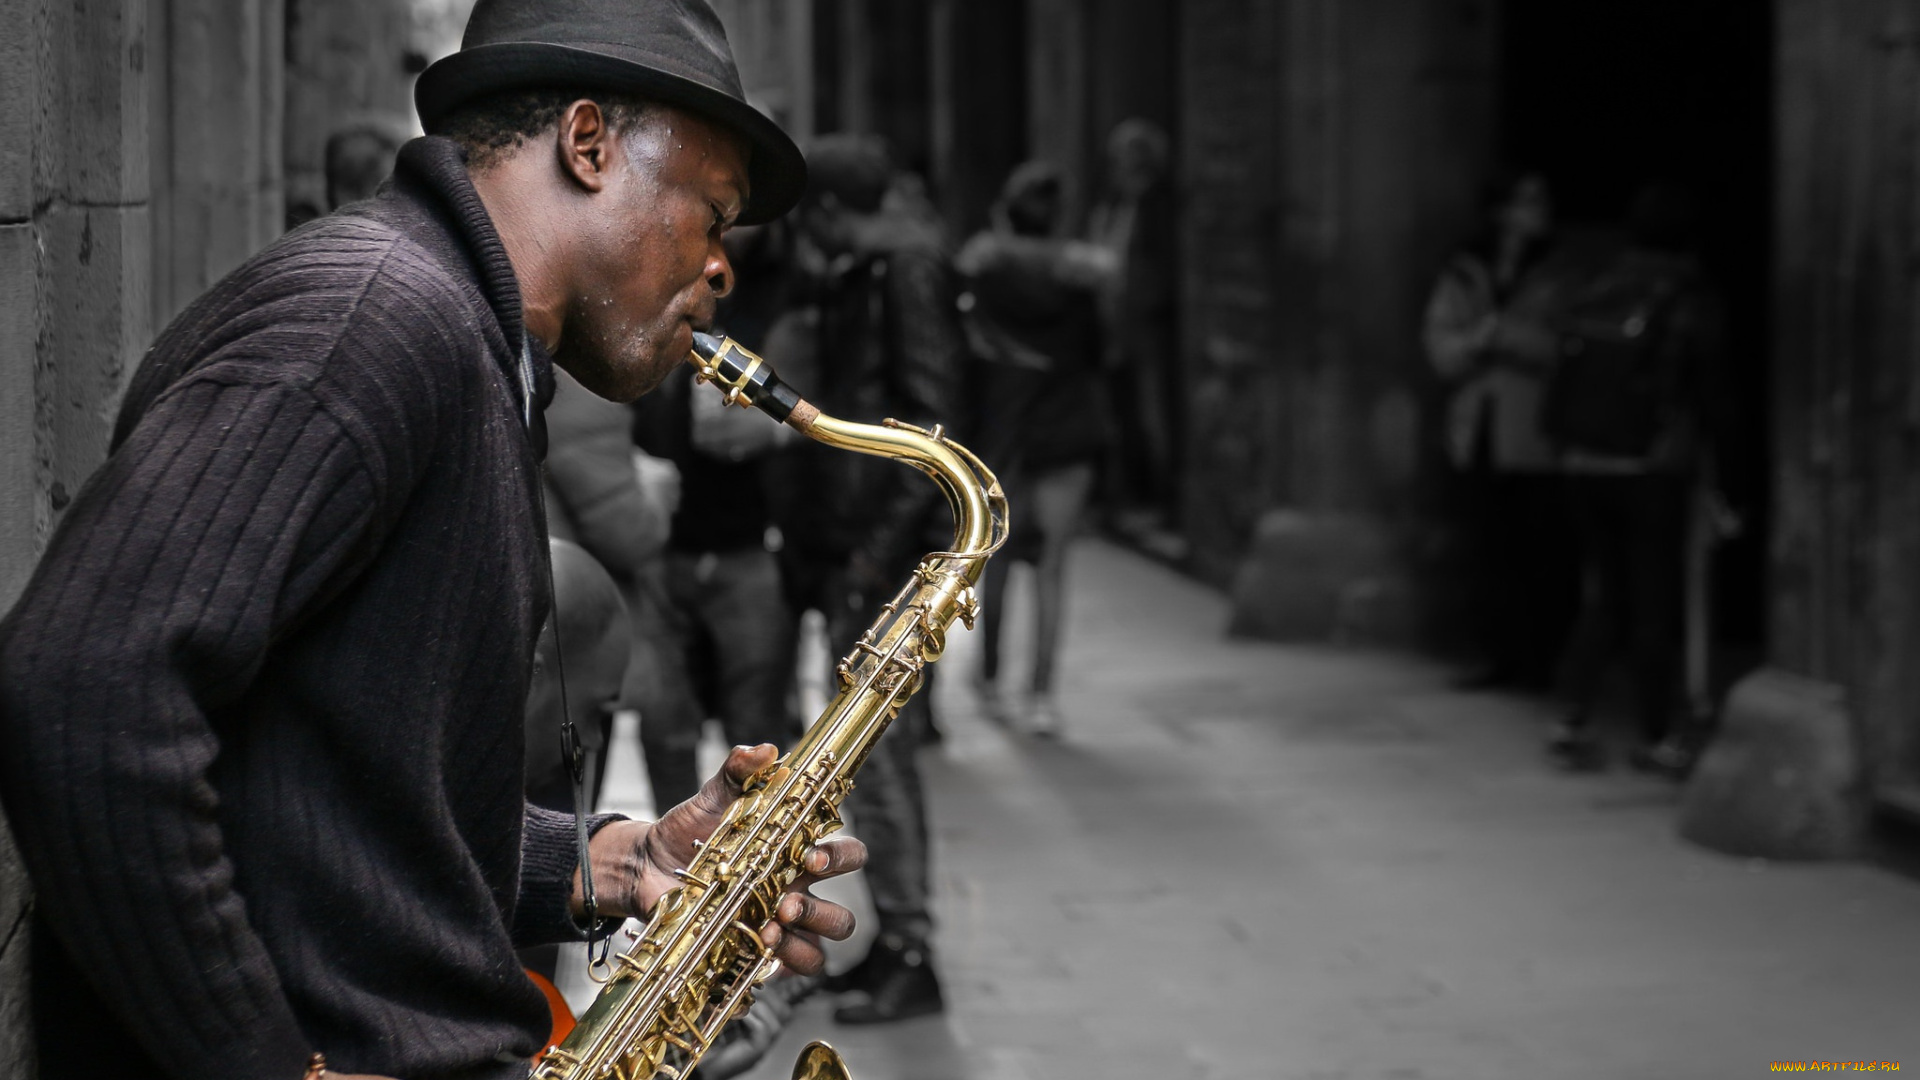 музыка, -другое, саксофон, мужчина, шляпа, музыкант, улица